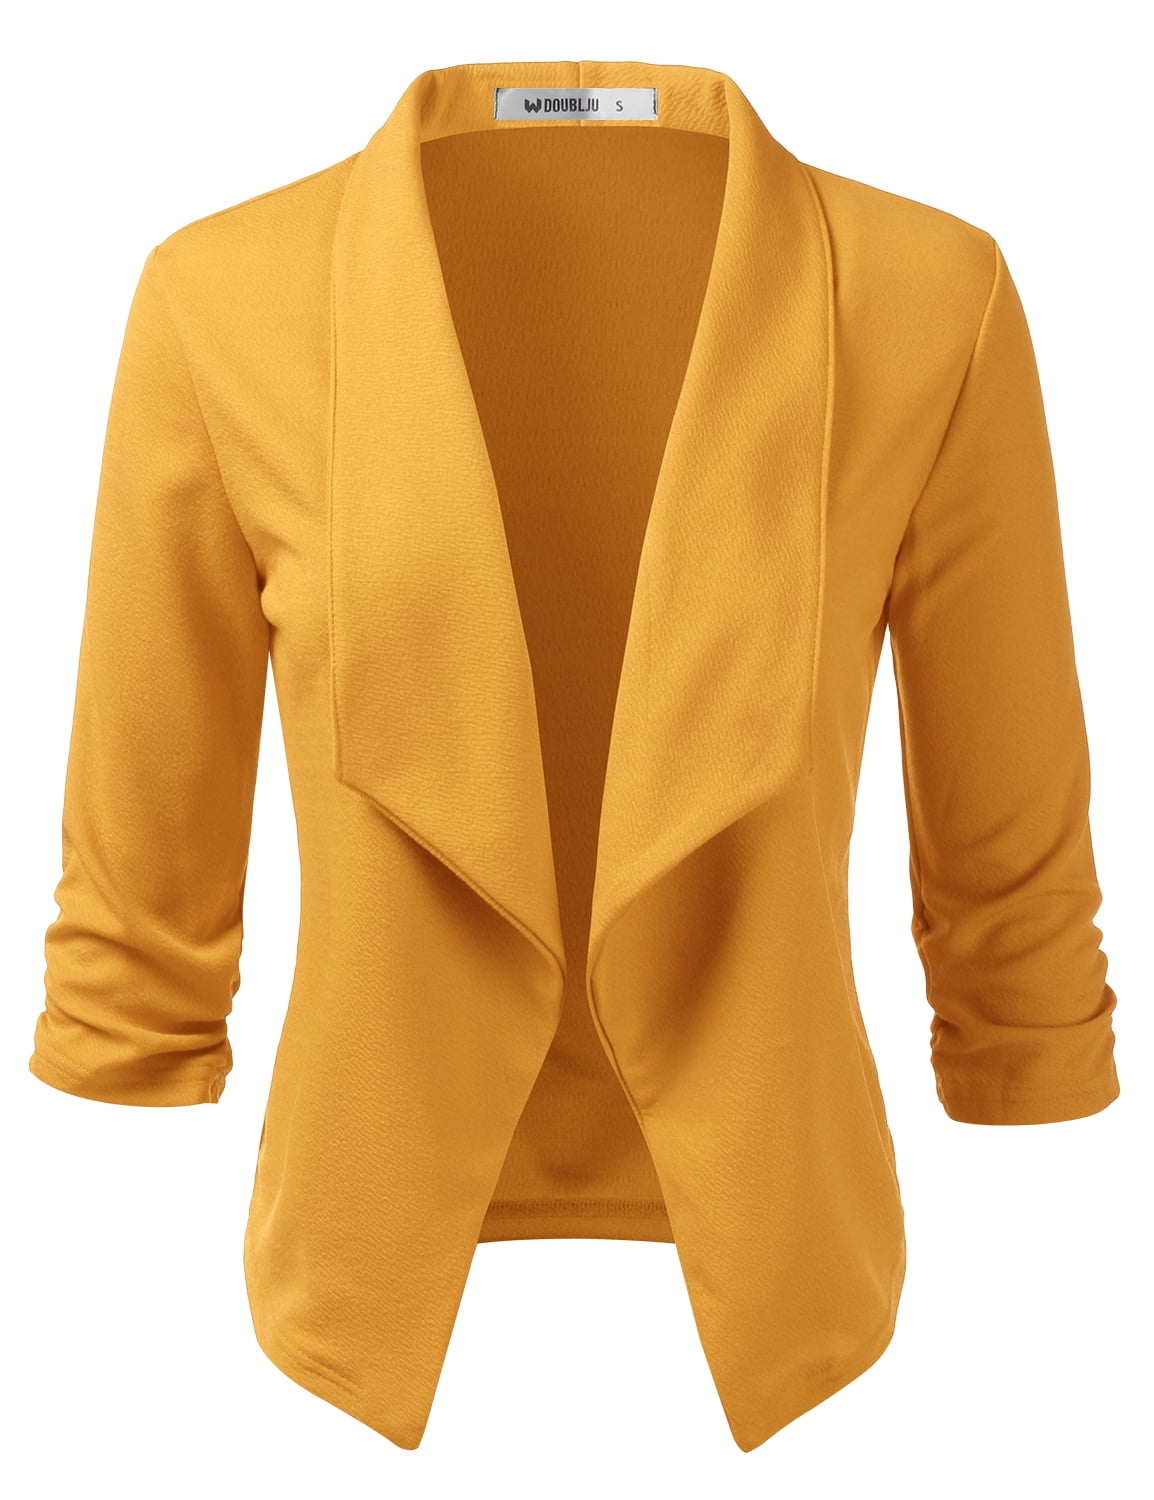 Women's Front 3/4 Sleeve Plus Size Office Cardigan Blazer MUSTARD 1X Plus - Walmart.com